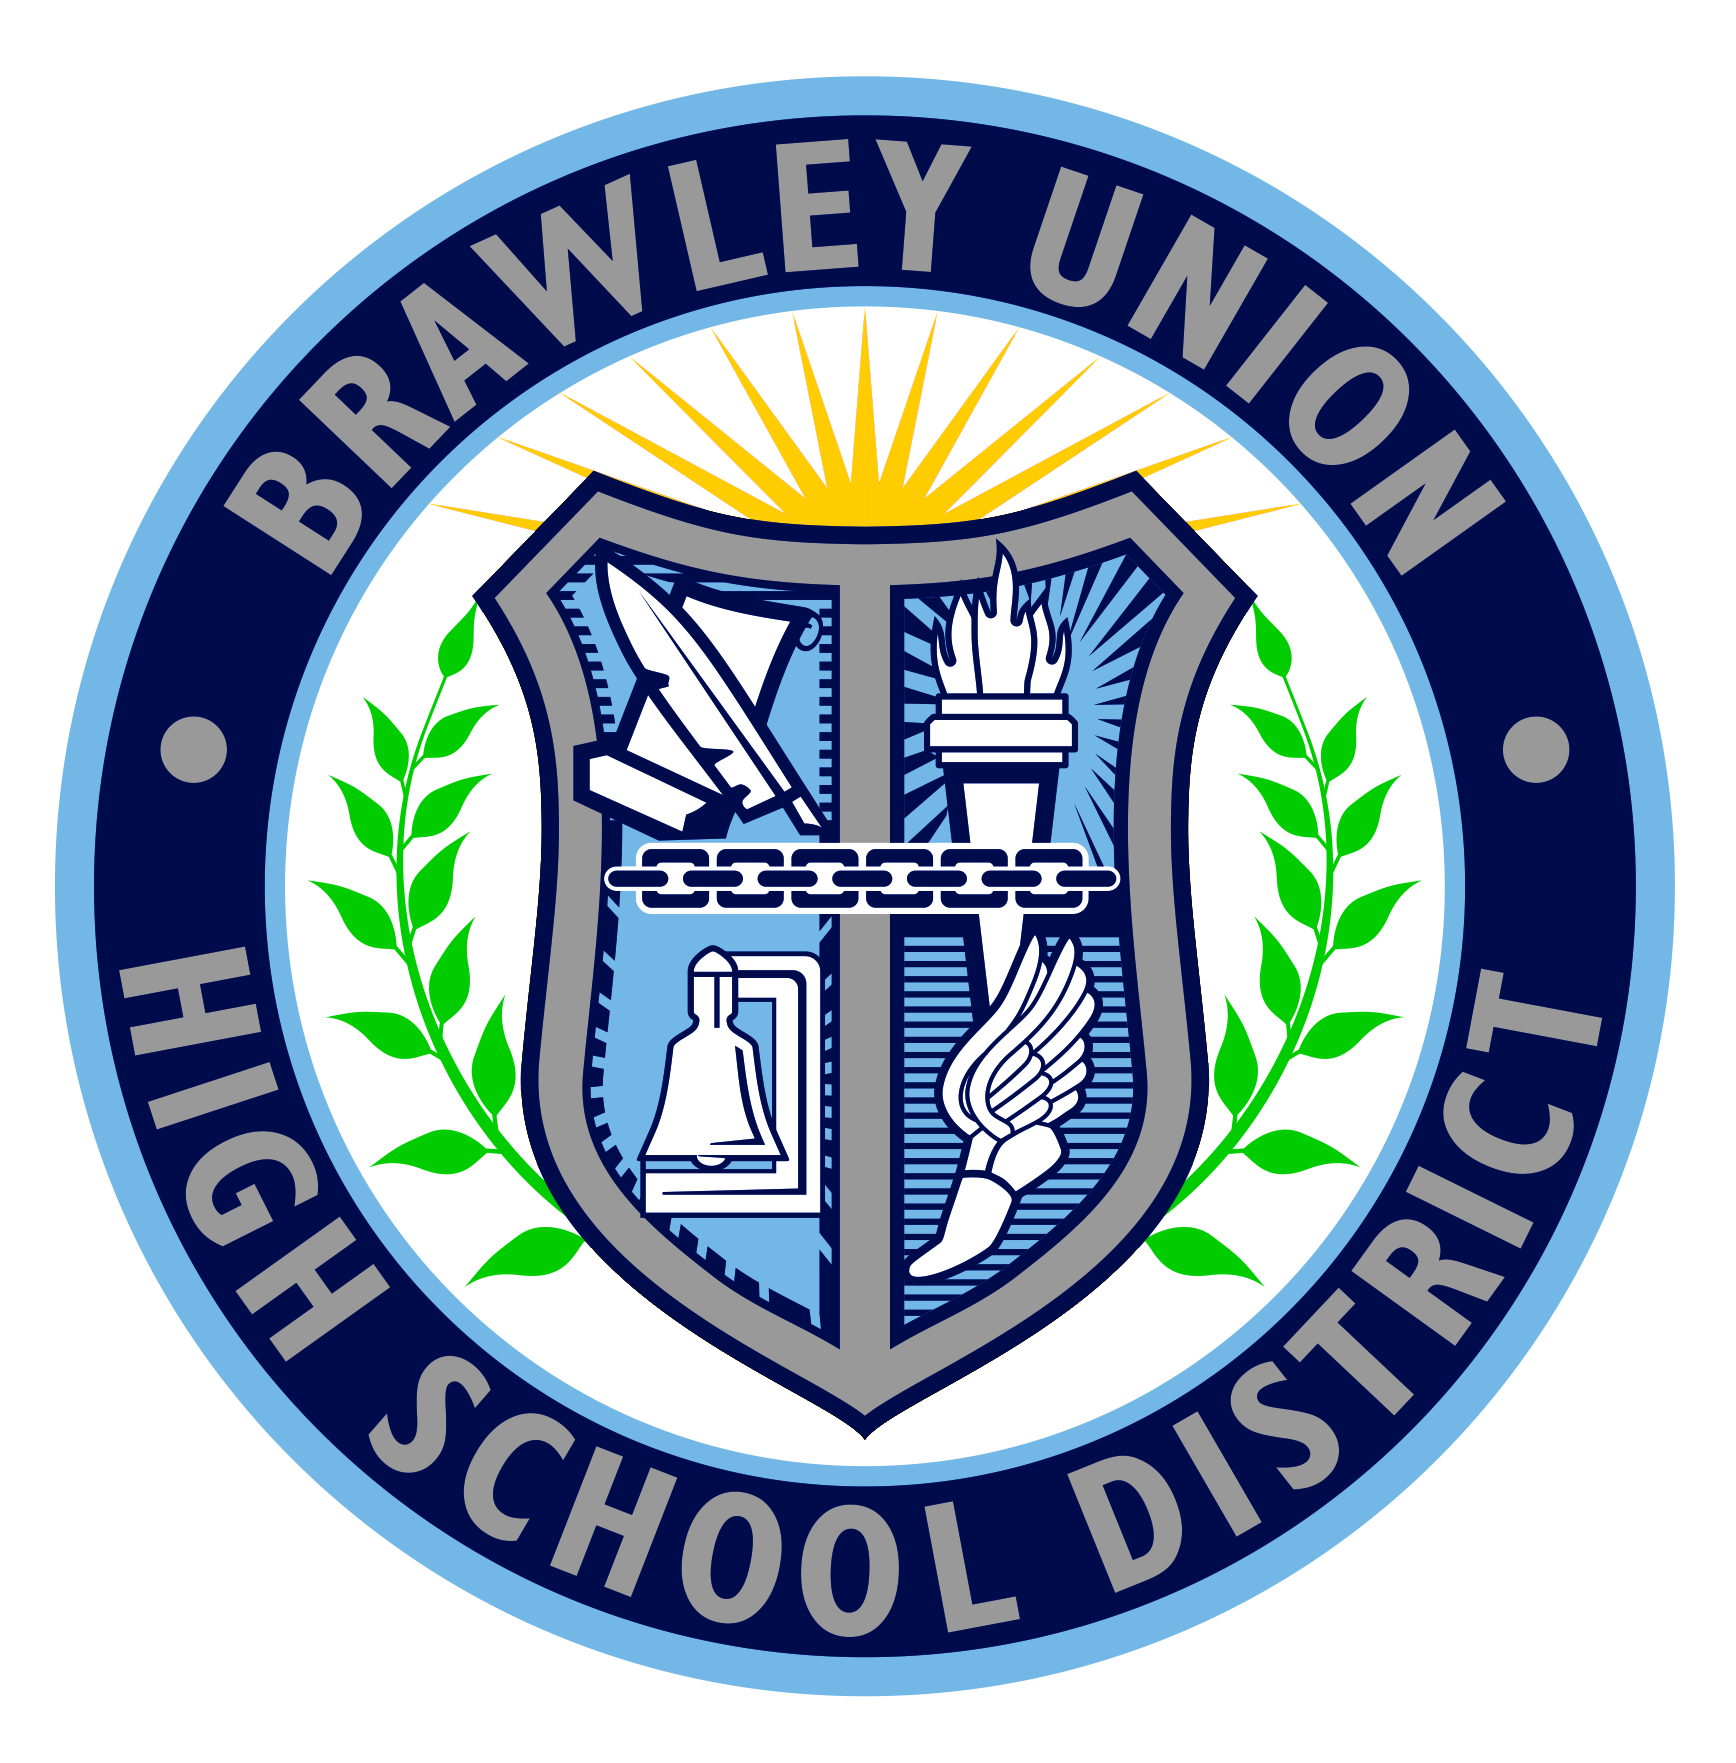 Brawley Unified School District logo